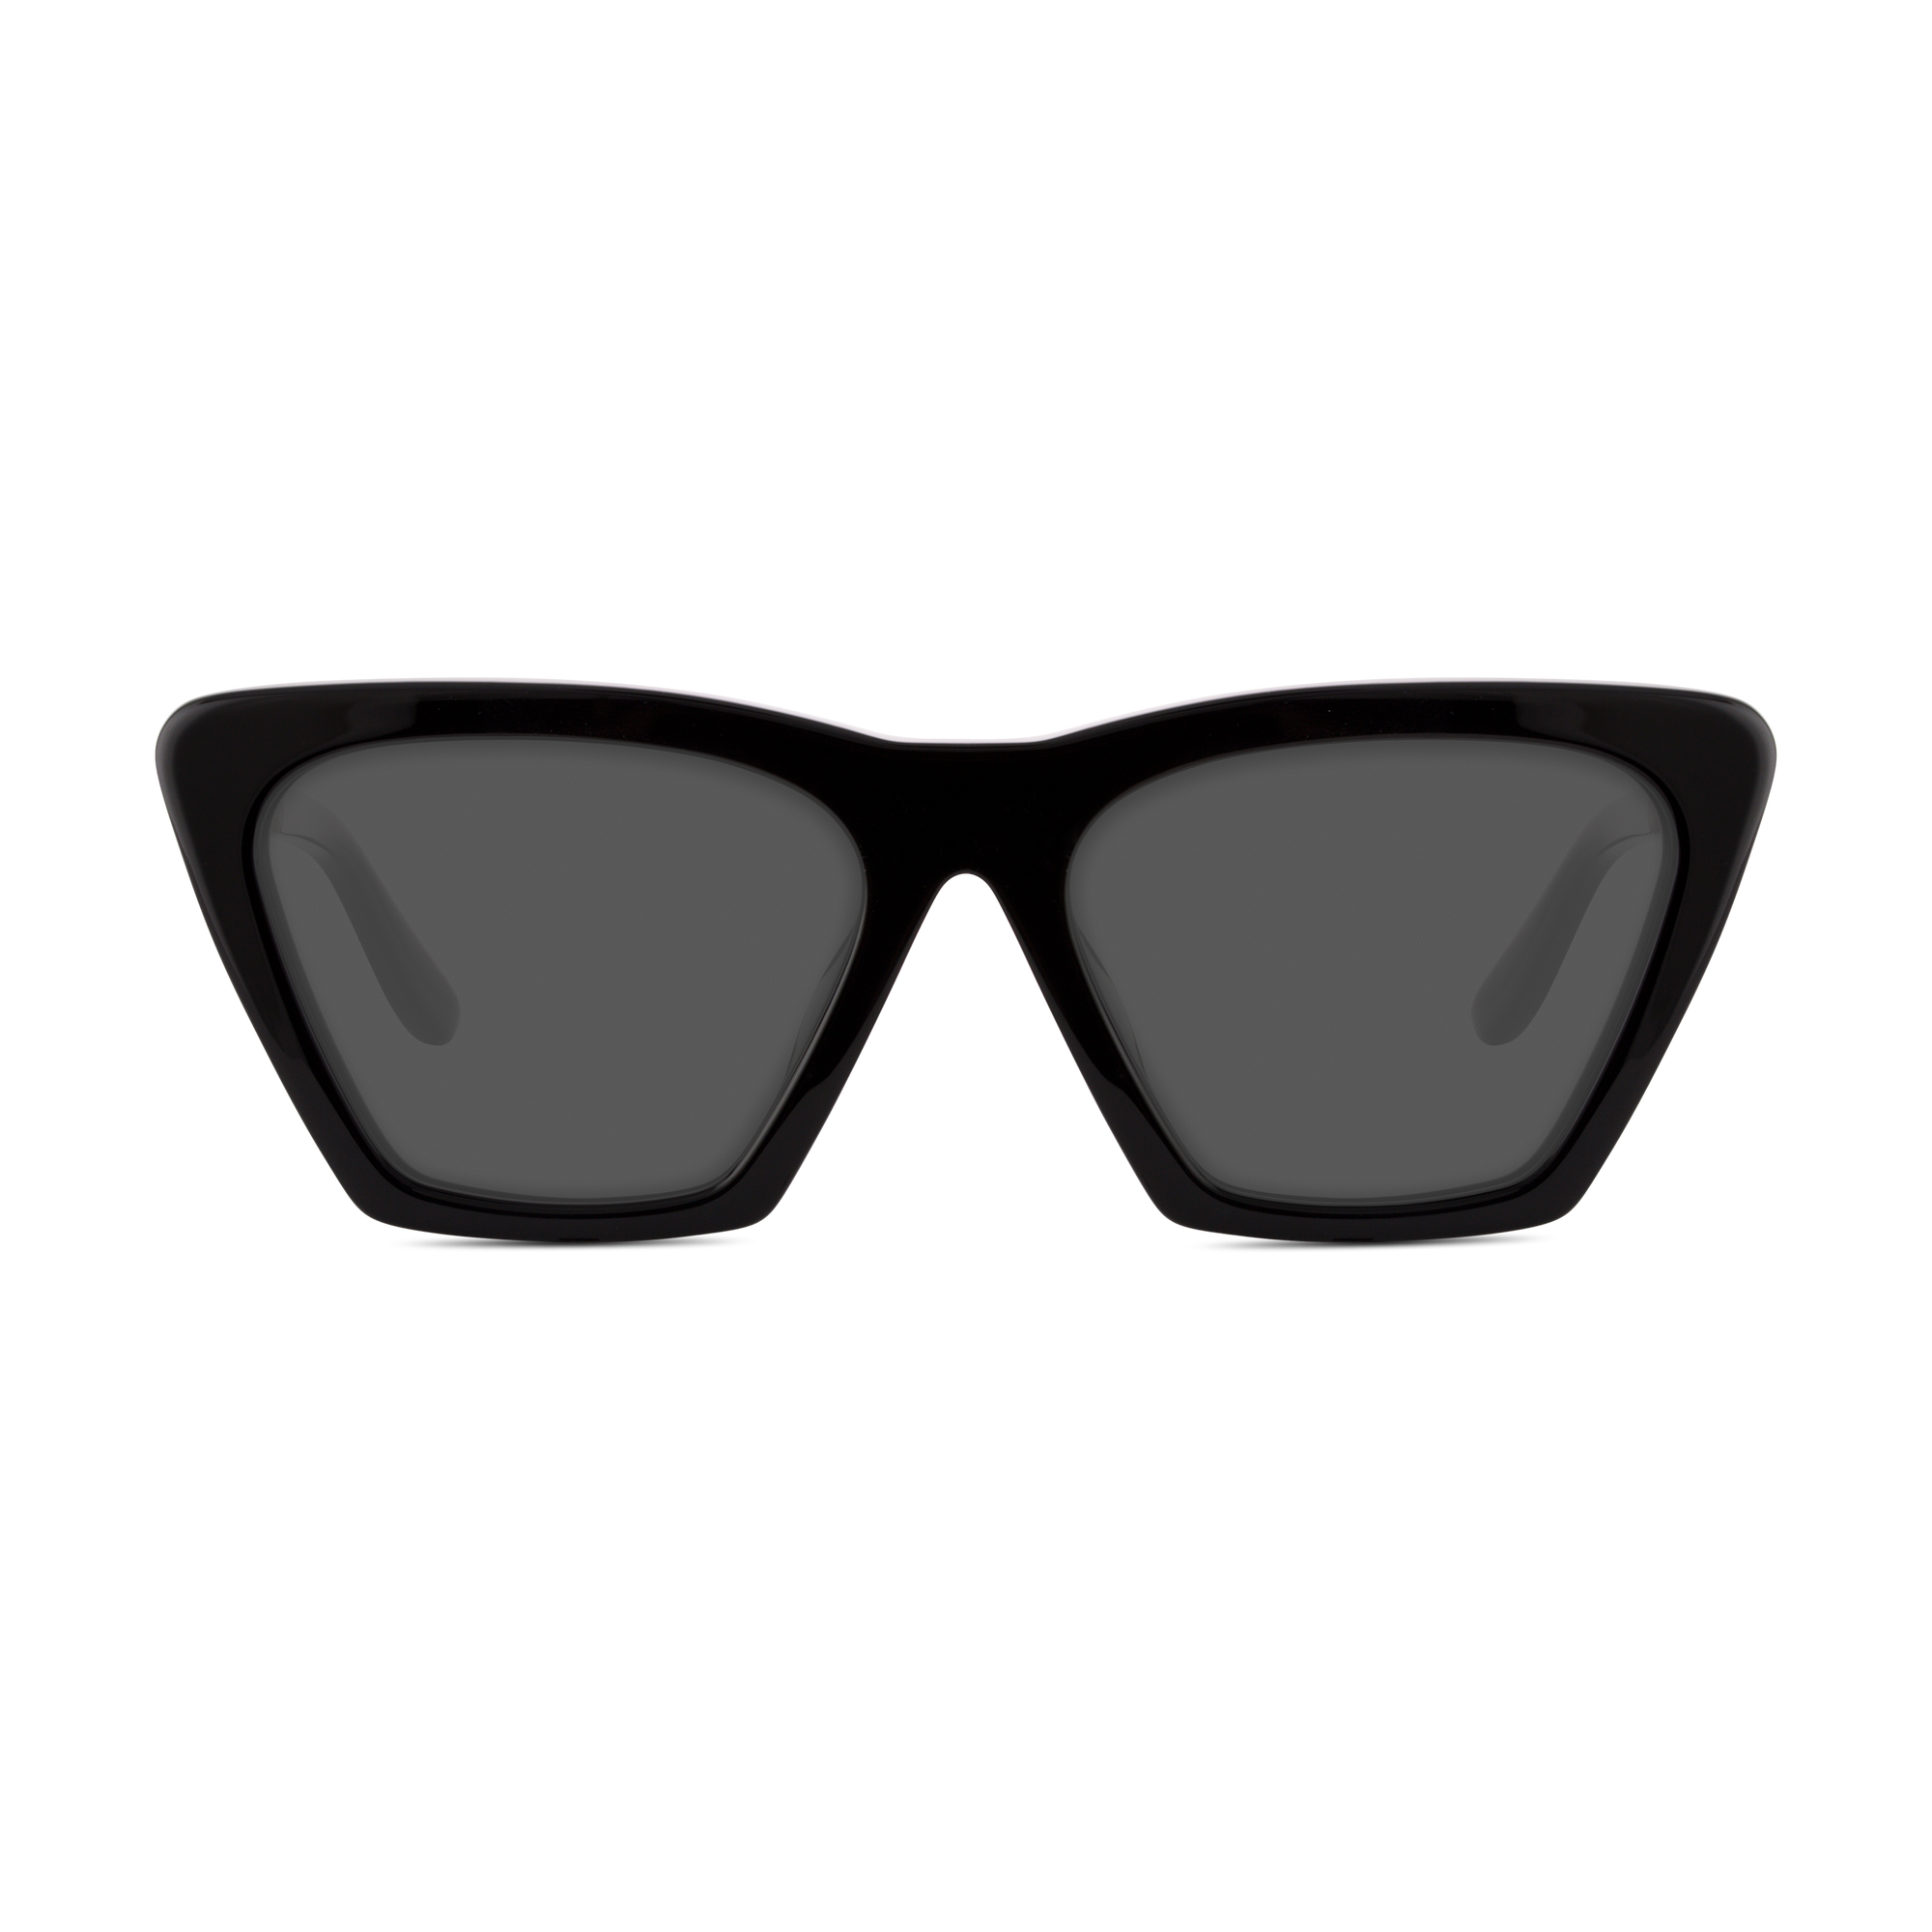 Figure | Sunglasses